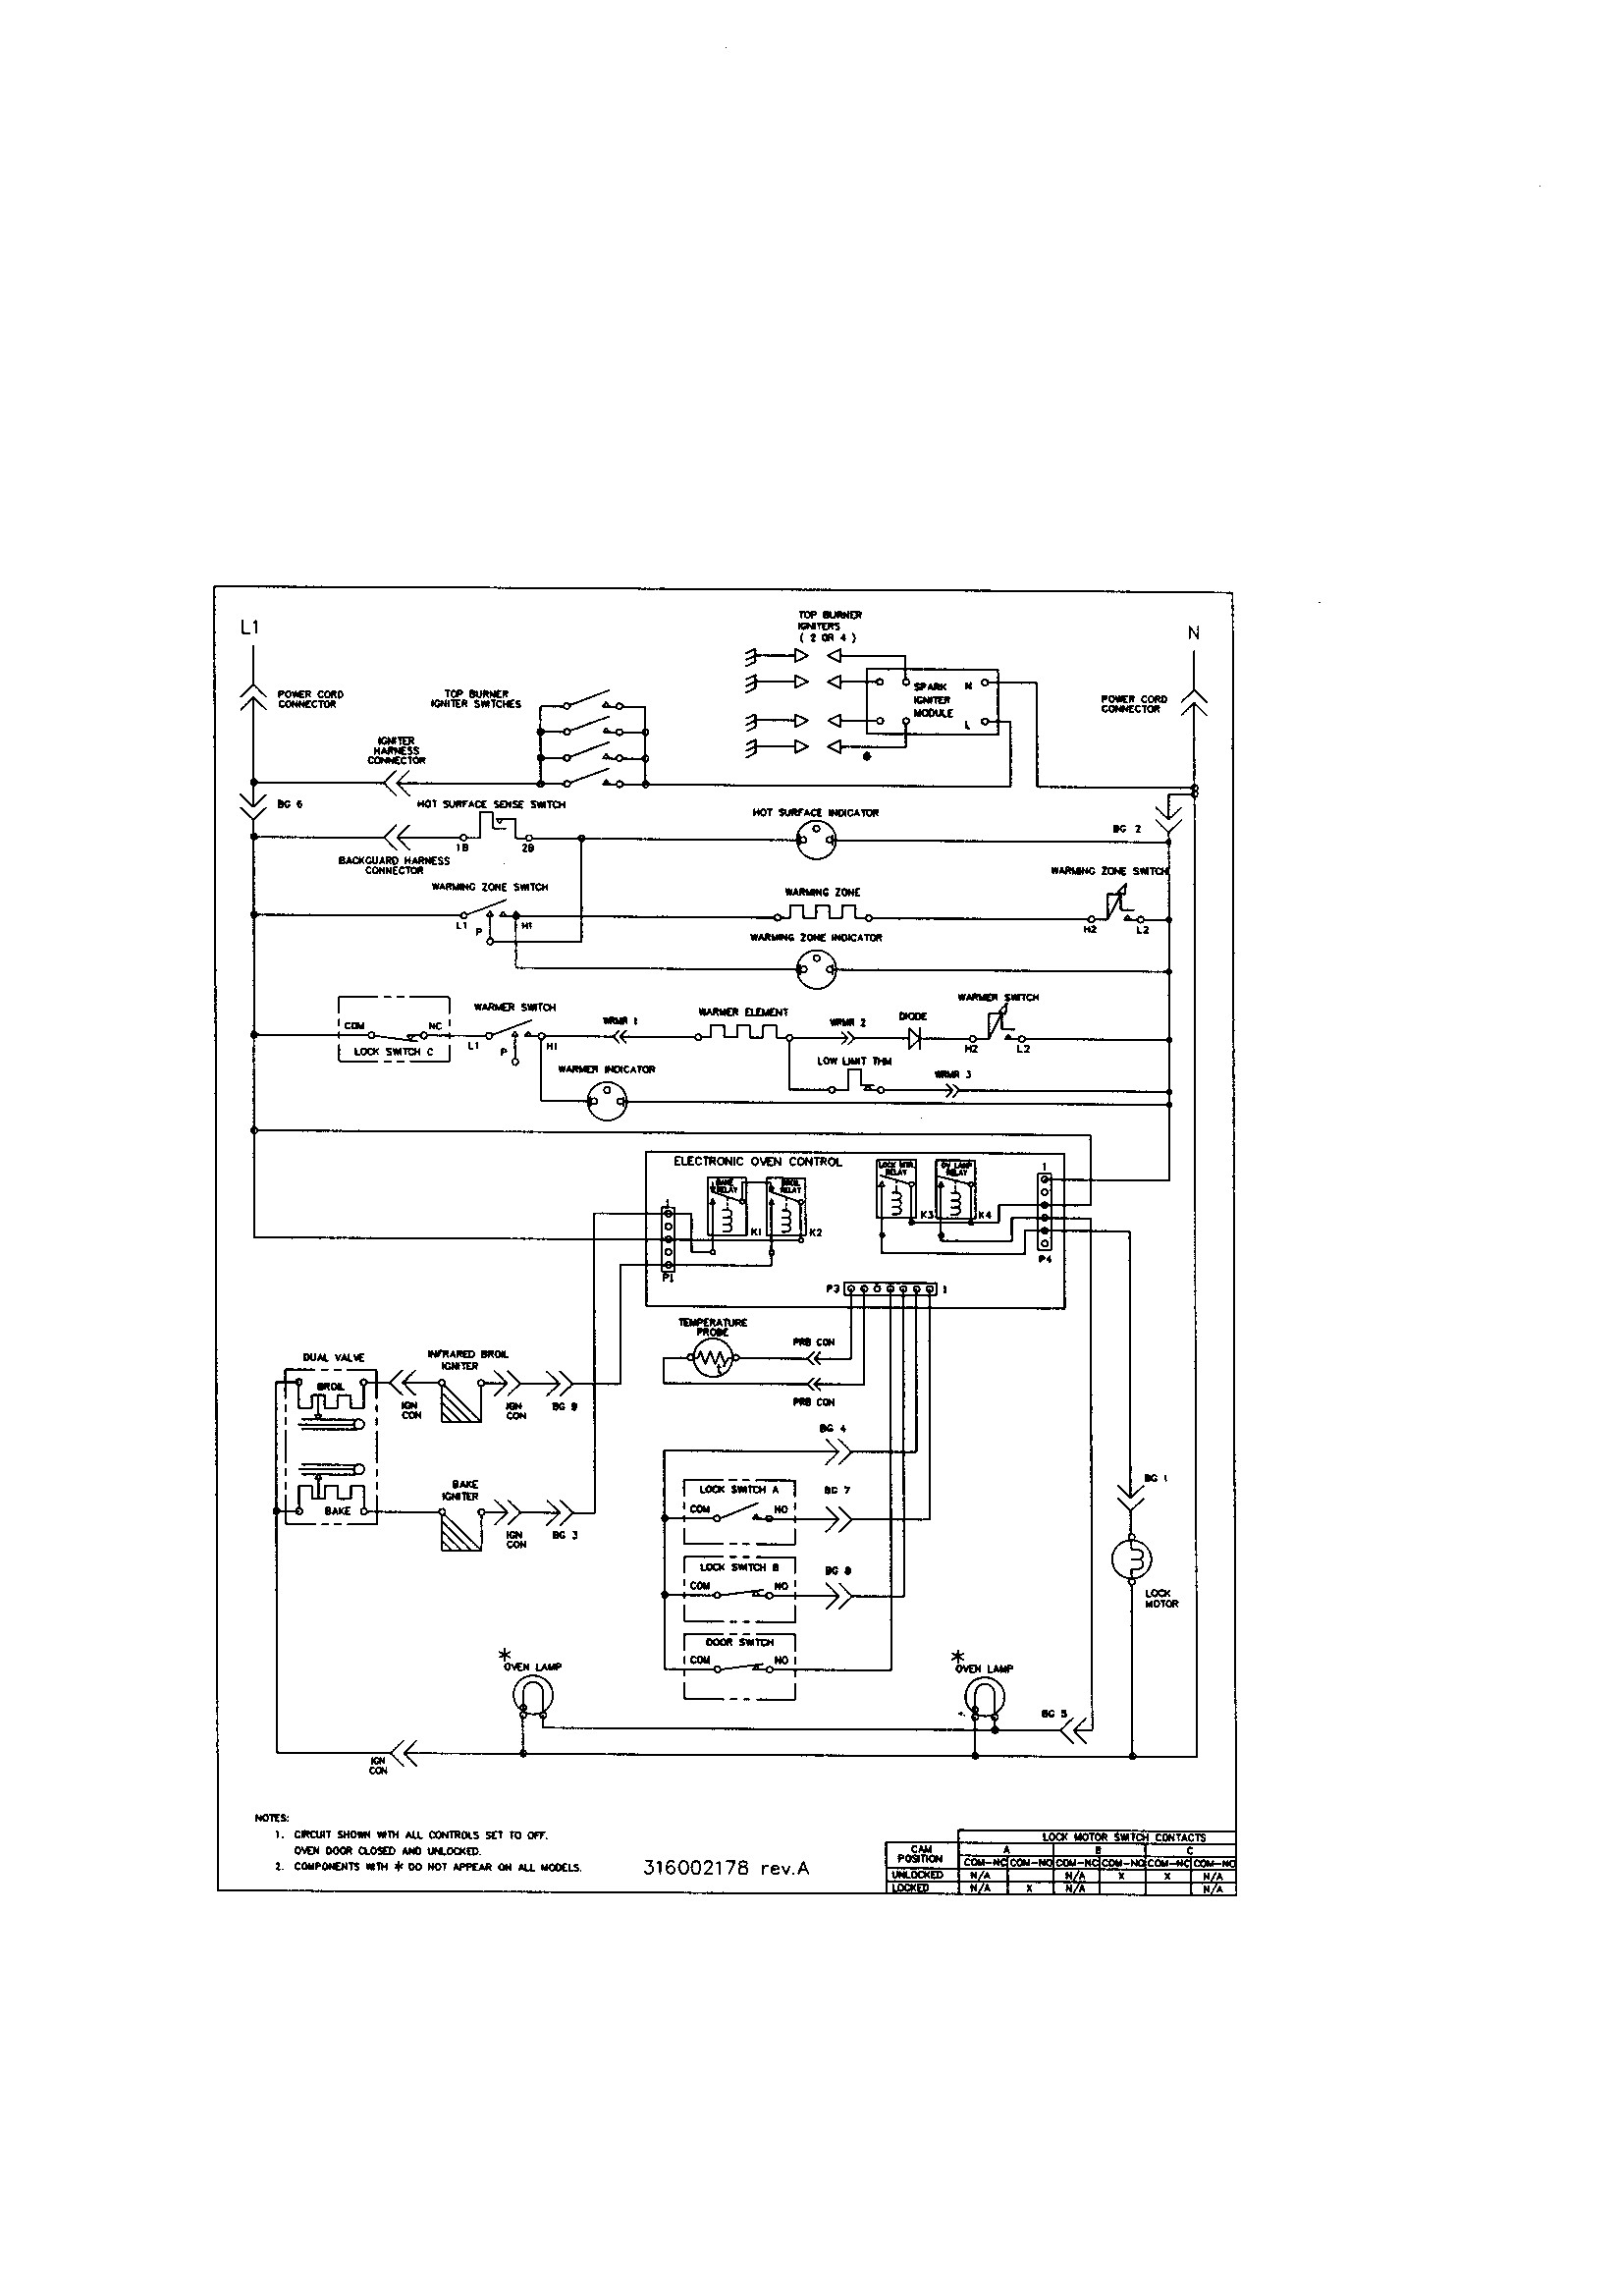 Ge Washer Motor Wiring Diagram Wiring Diagram for An Ac Capacitor Free Download Car Ge Washer Motor Of Ge Washer Motor Wiring Diagram